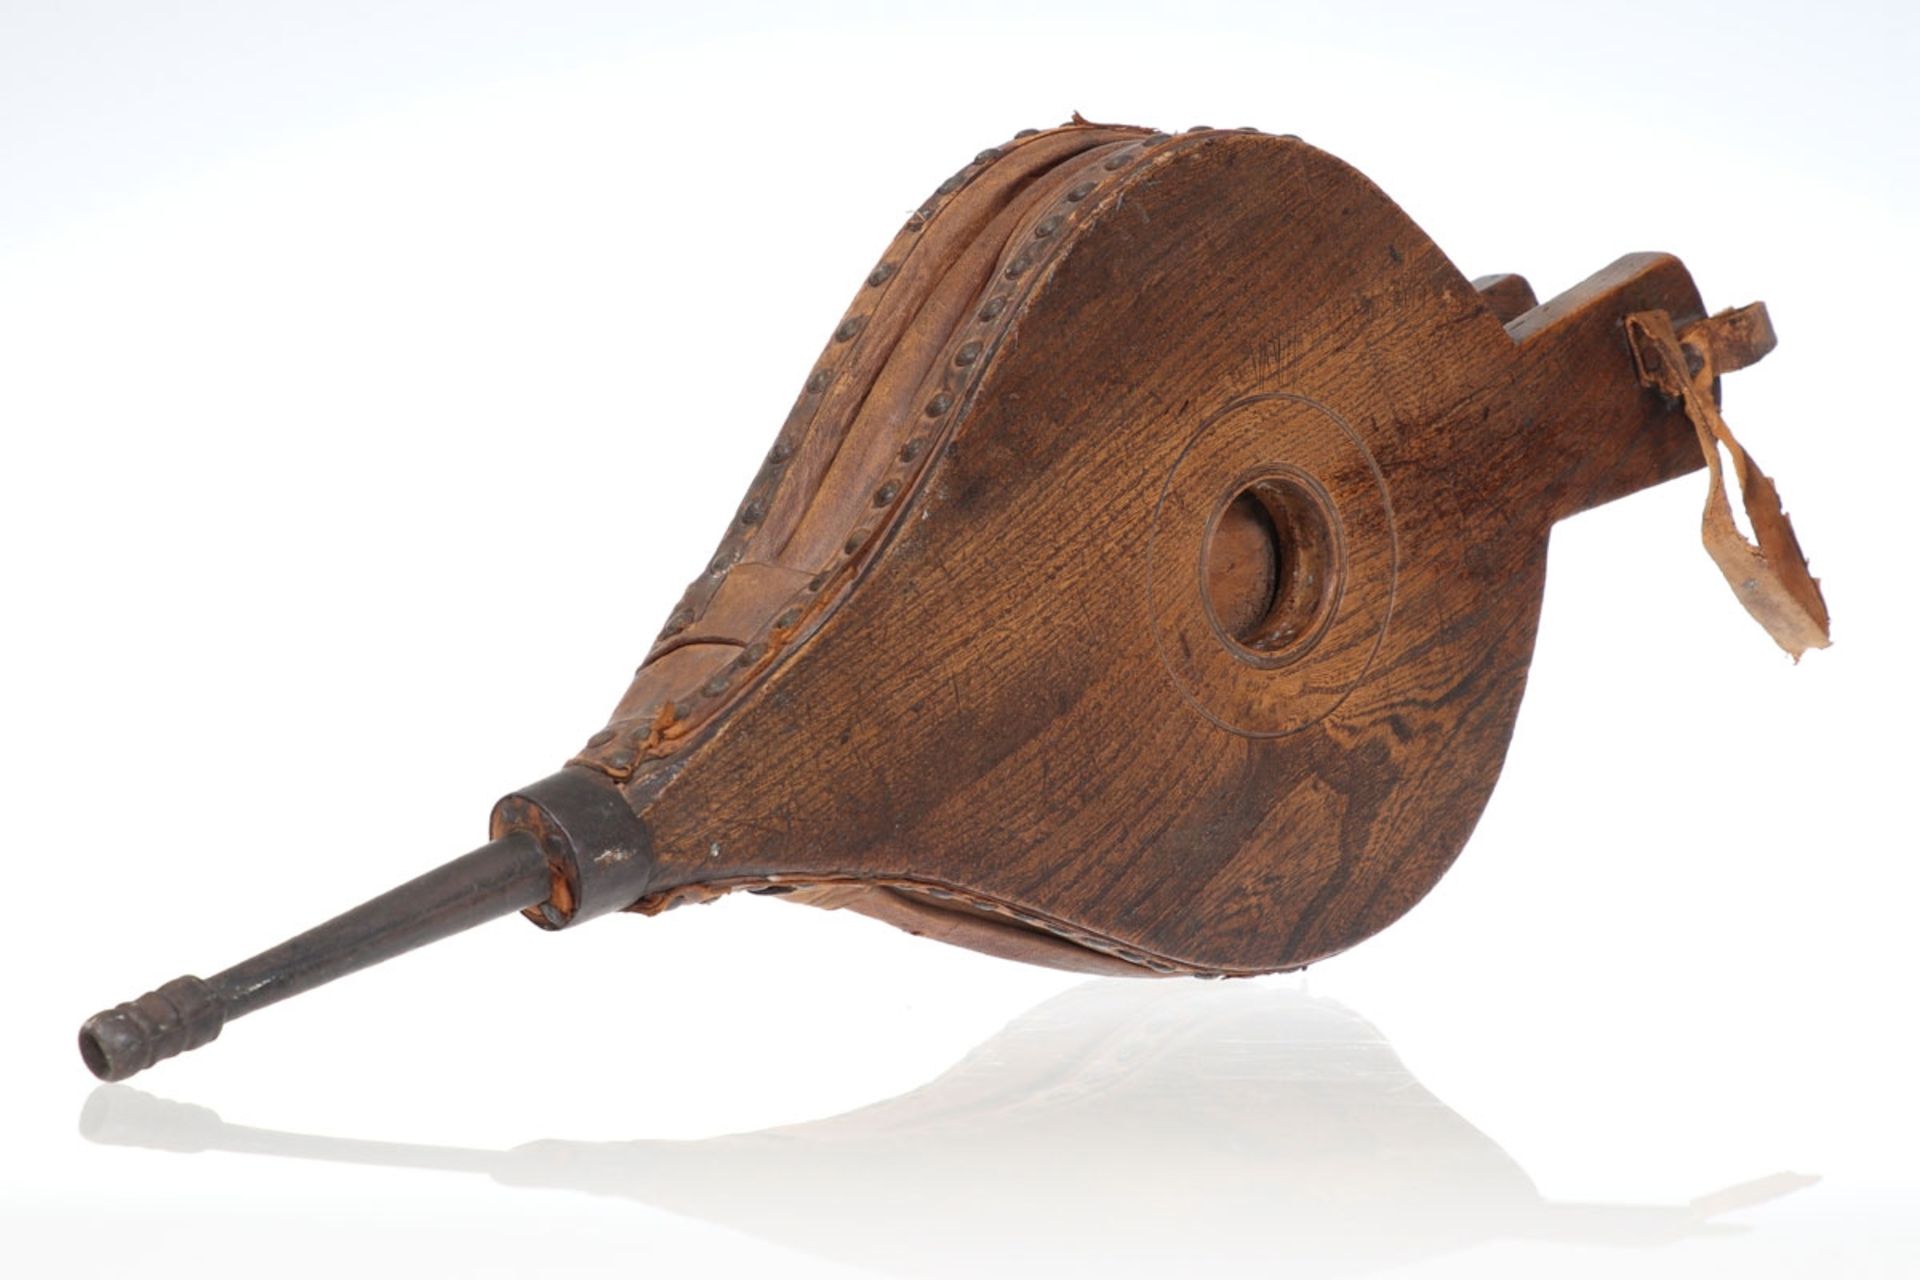 BlasebalgWohl England, frühes 19. Jahrhundert. Eiche. Leder. L. 56 cm. - Provenienz: Kunstsammlung